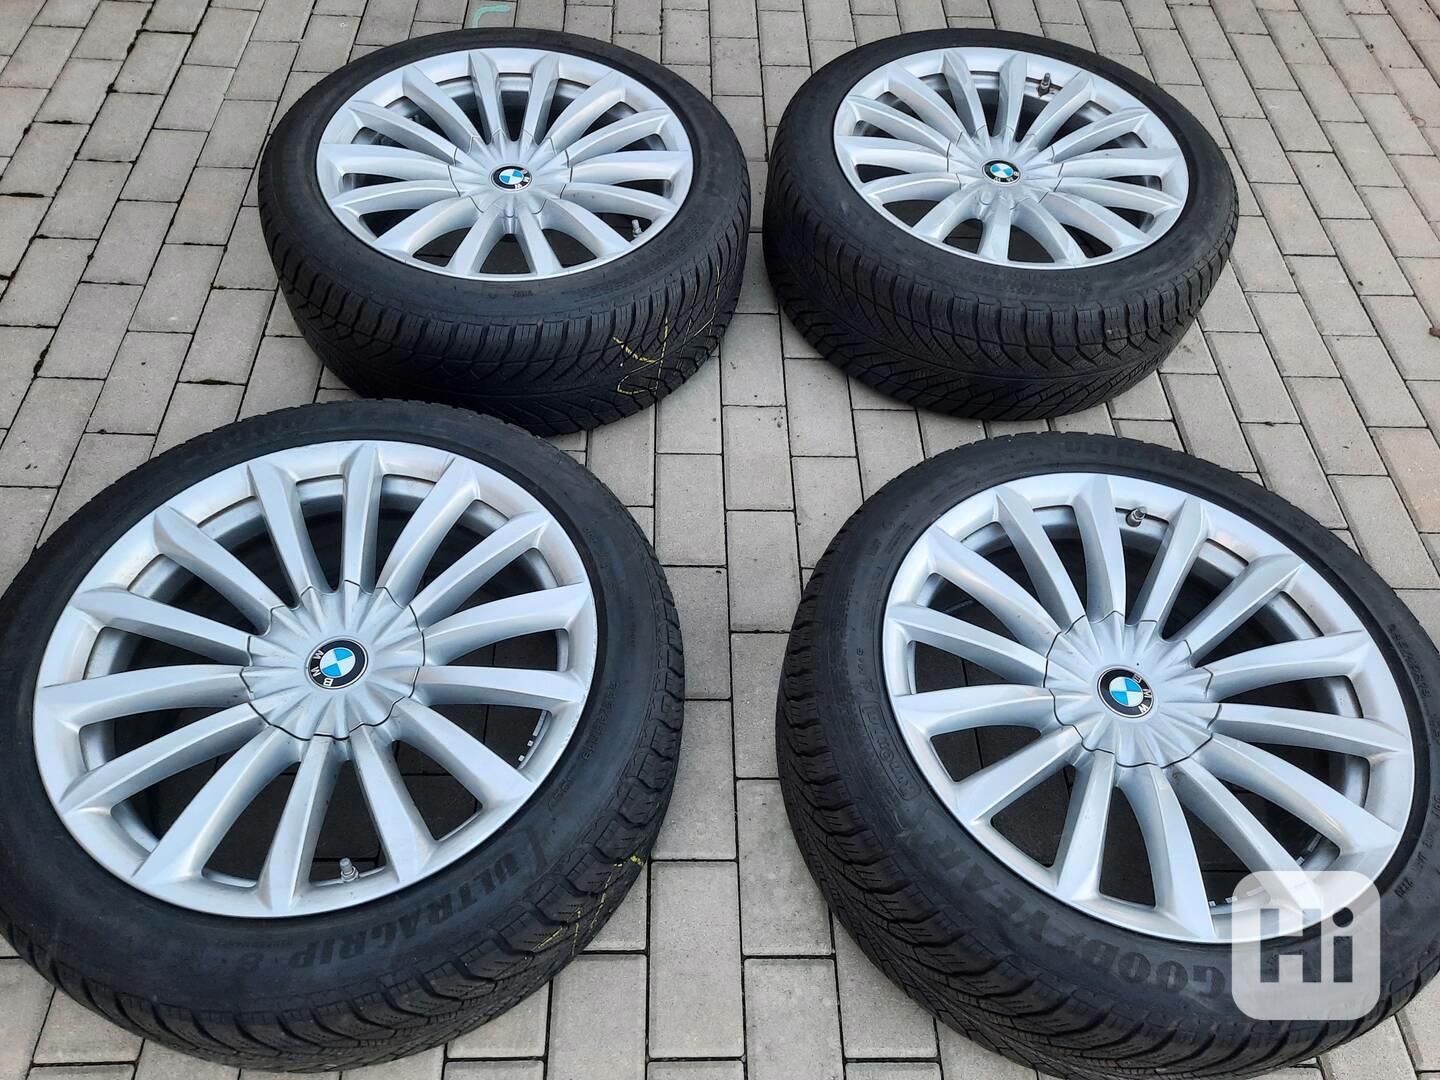 Originál sada BMW alu + zimní pneu Goodyear Ultragrip 8 - foto 1